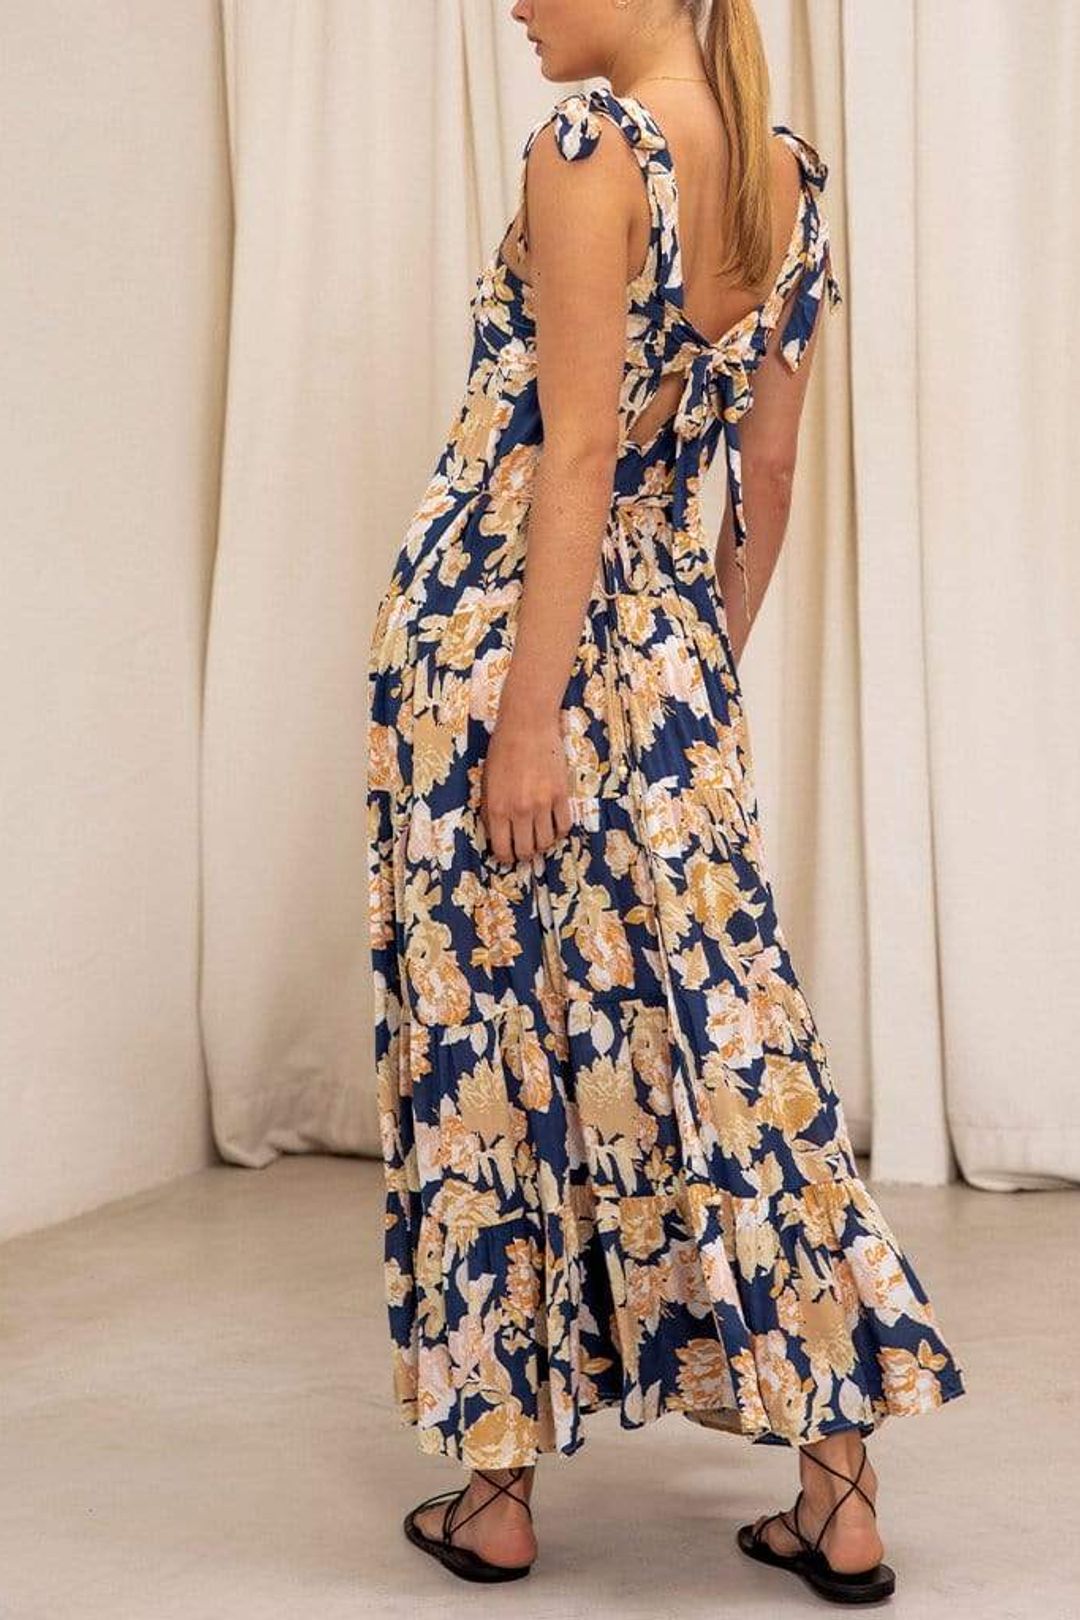 Kivari 'Briar' Strappy Maxi Dress - Navy Floral, Size M (AU 10)